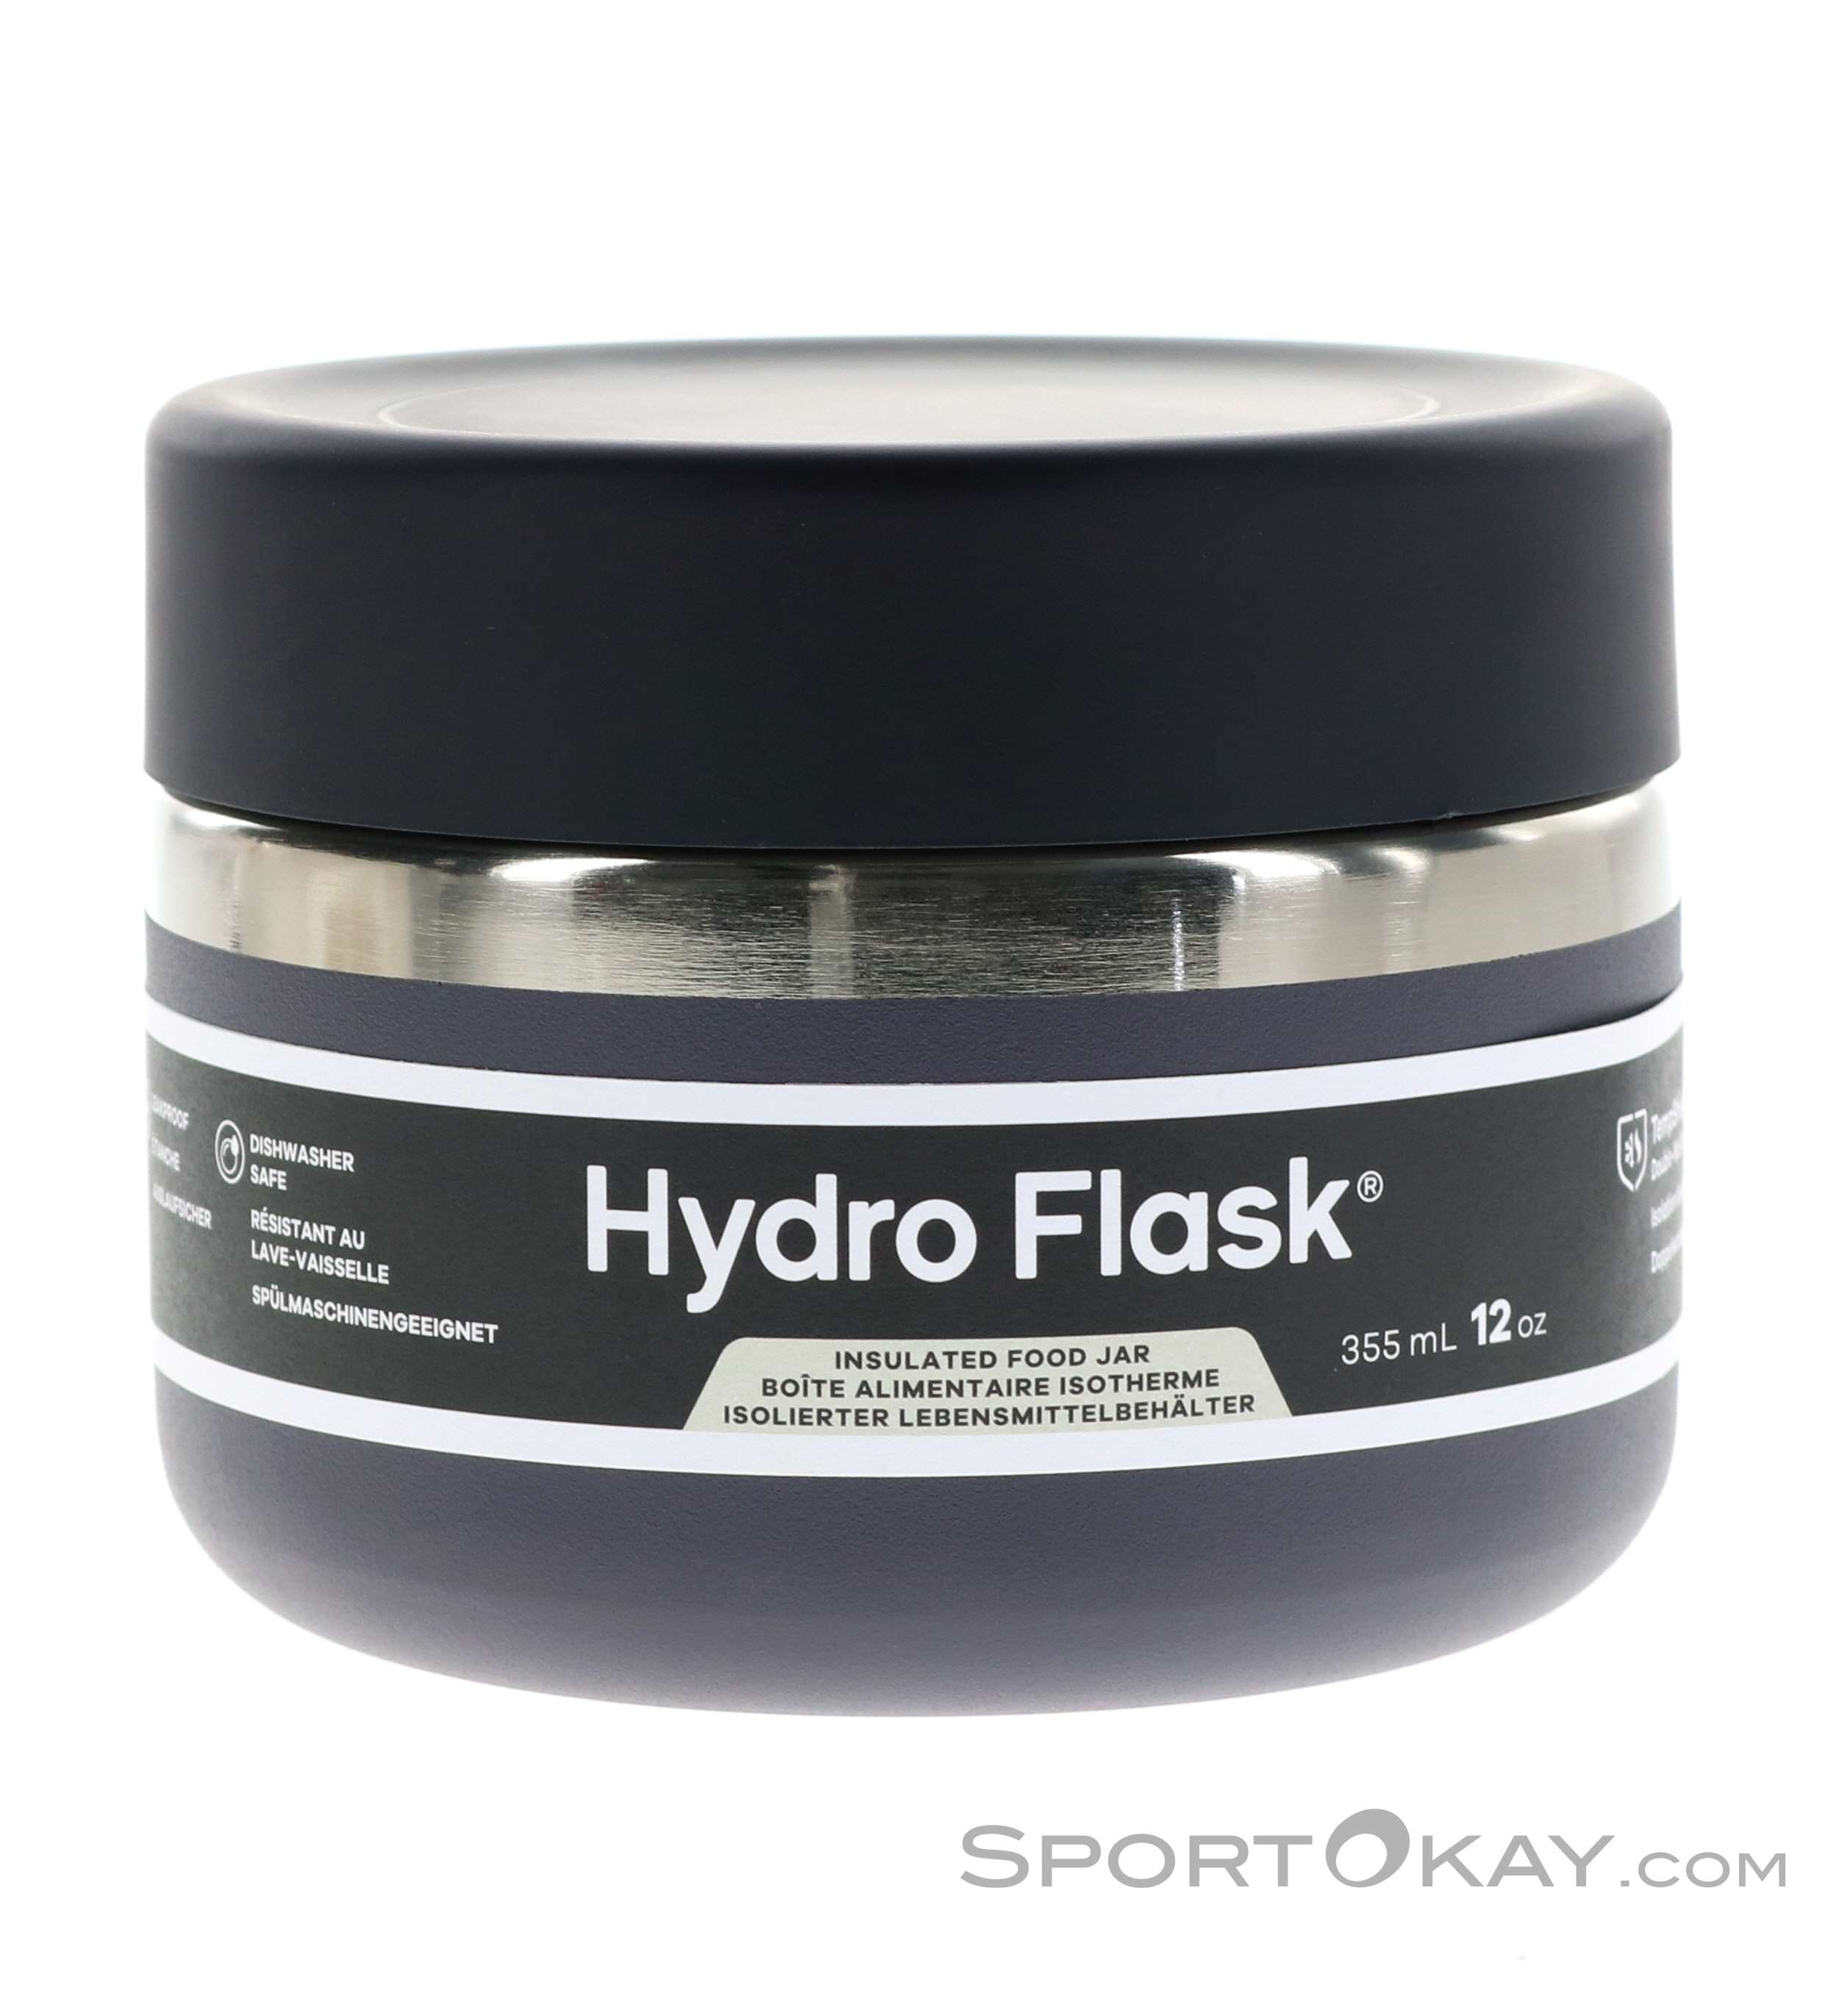 Hydro Flask 12 oz. Insulated Food Jar - Chili